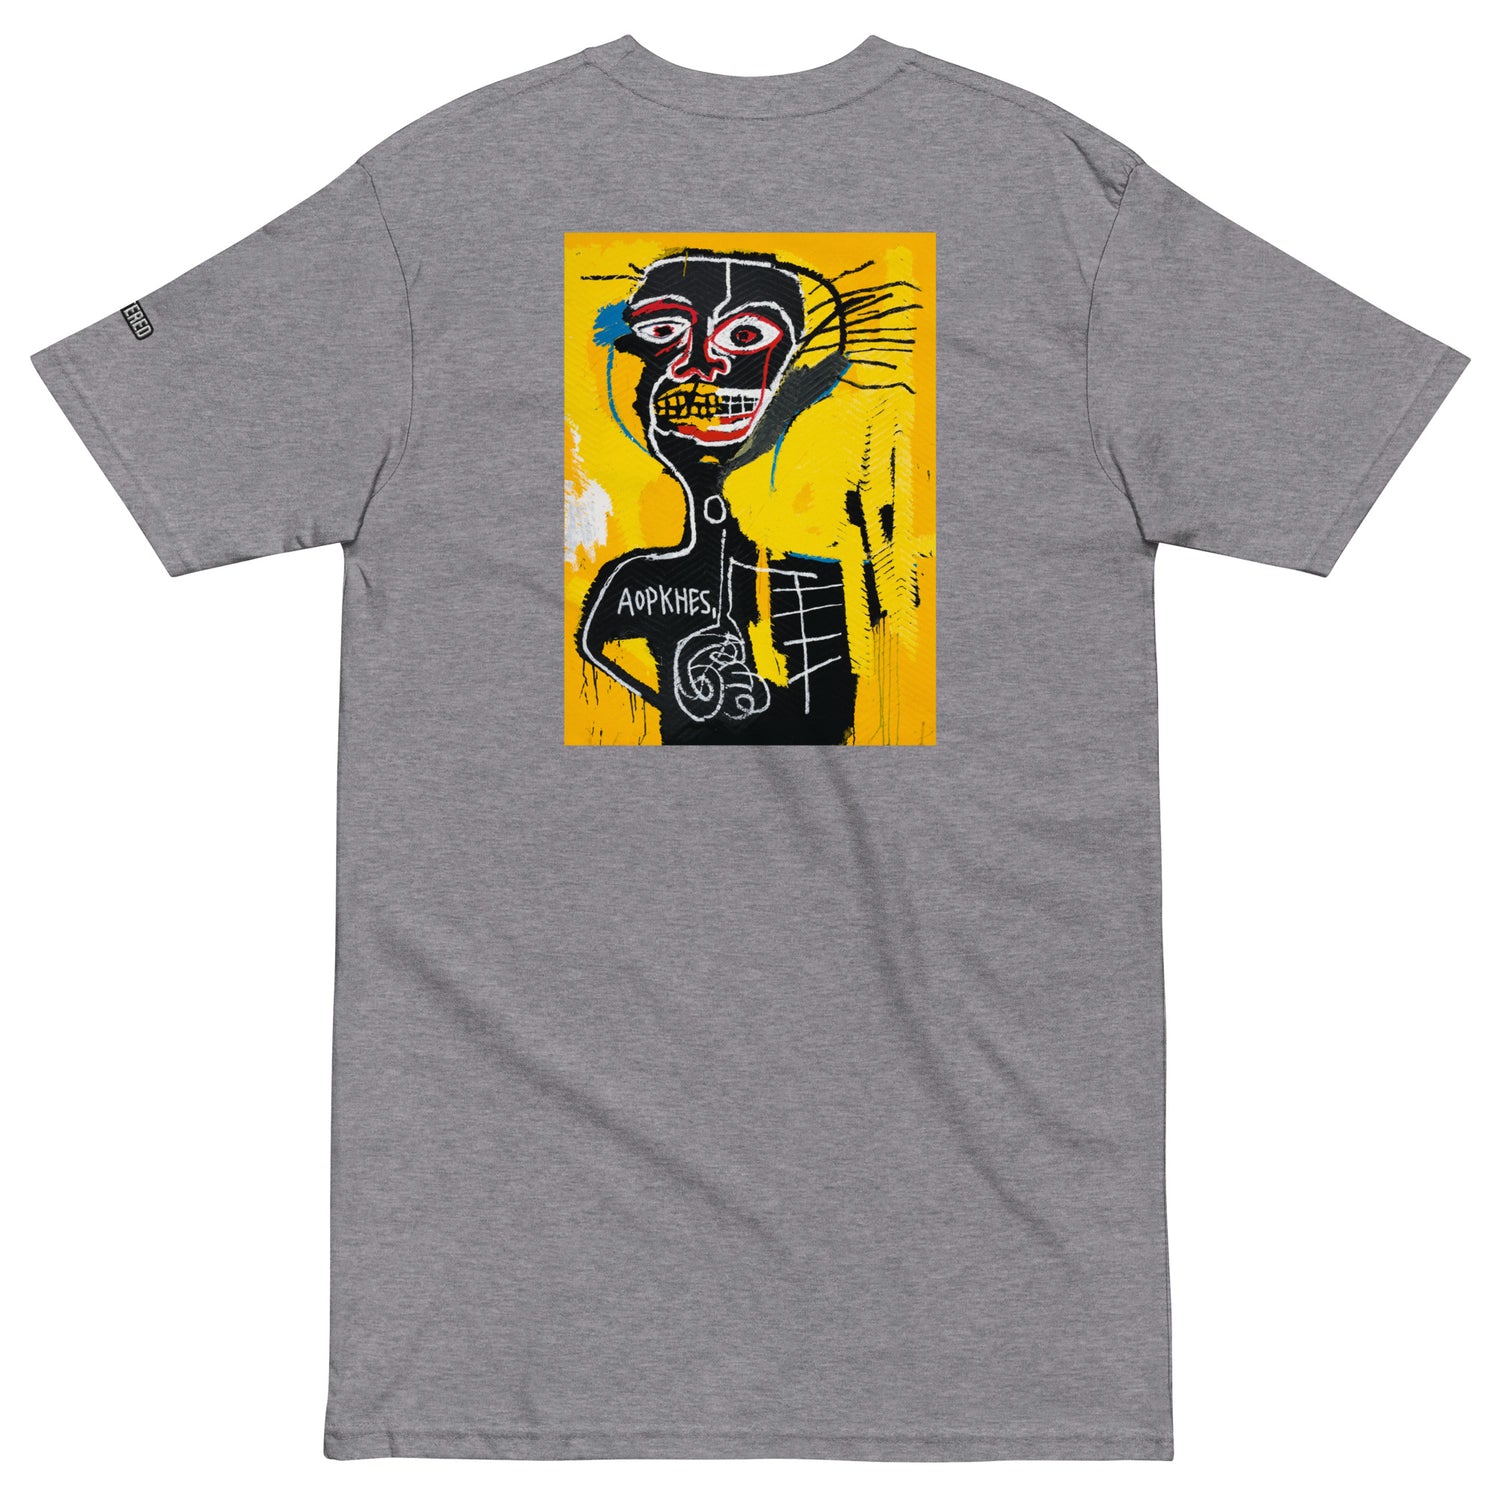 Jean-Michel Basquiat "Cabeza" Artwork Embroidered + Printed Premium Grey Streetwear T-shirt Scattered